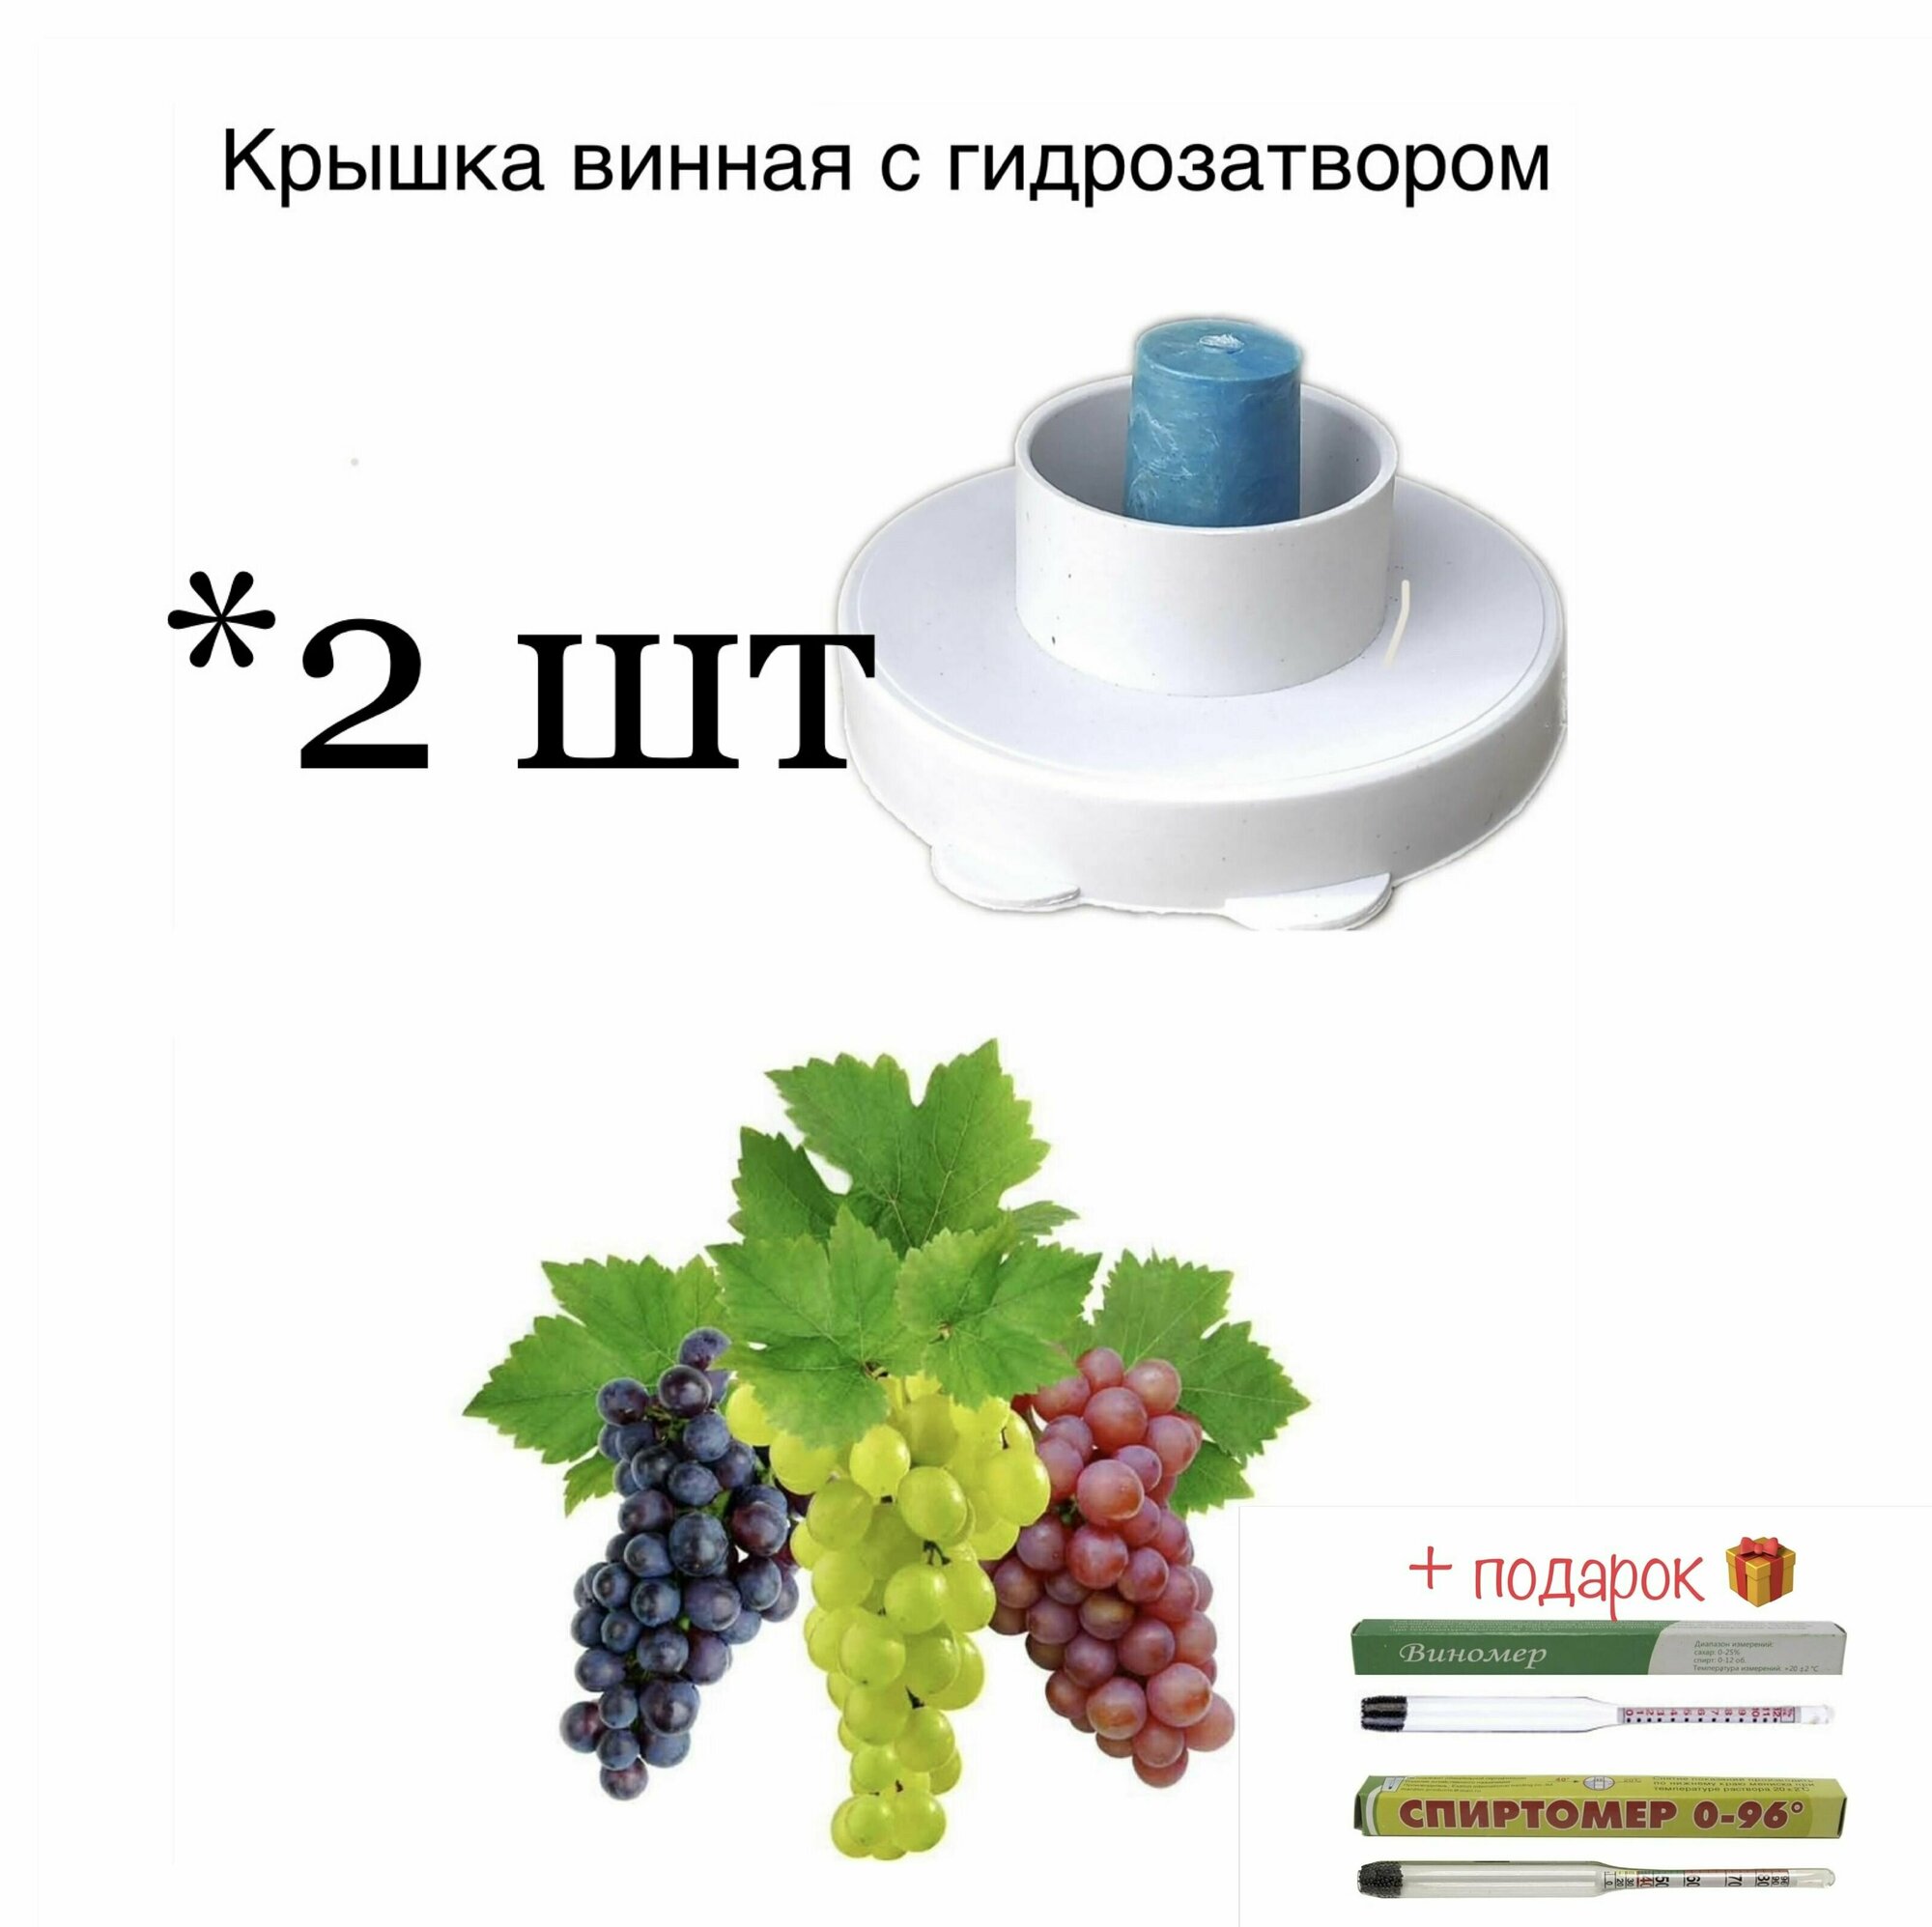 Крышка на баллон винная с гидрозатвором, (2 шт)+подарок набор АСП (виномер и спиртомер)